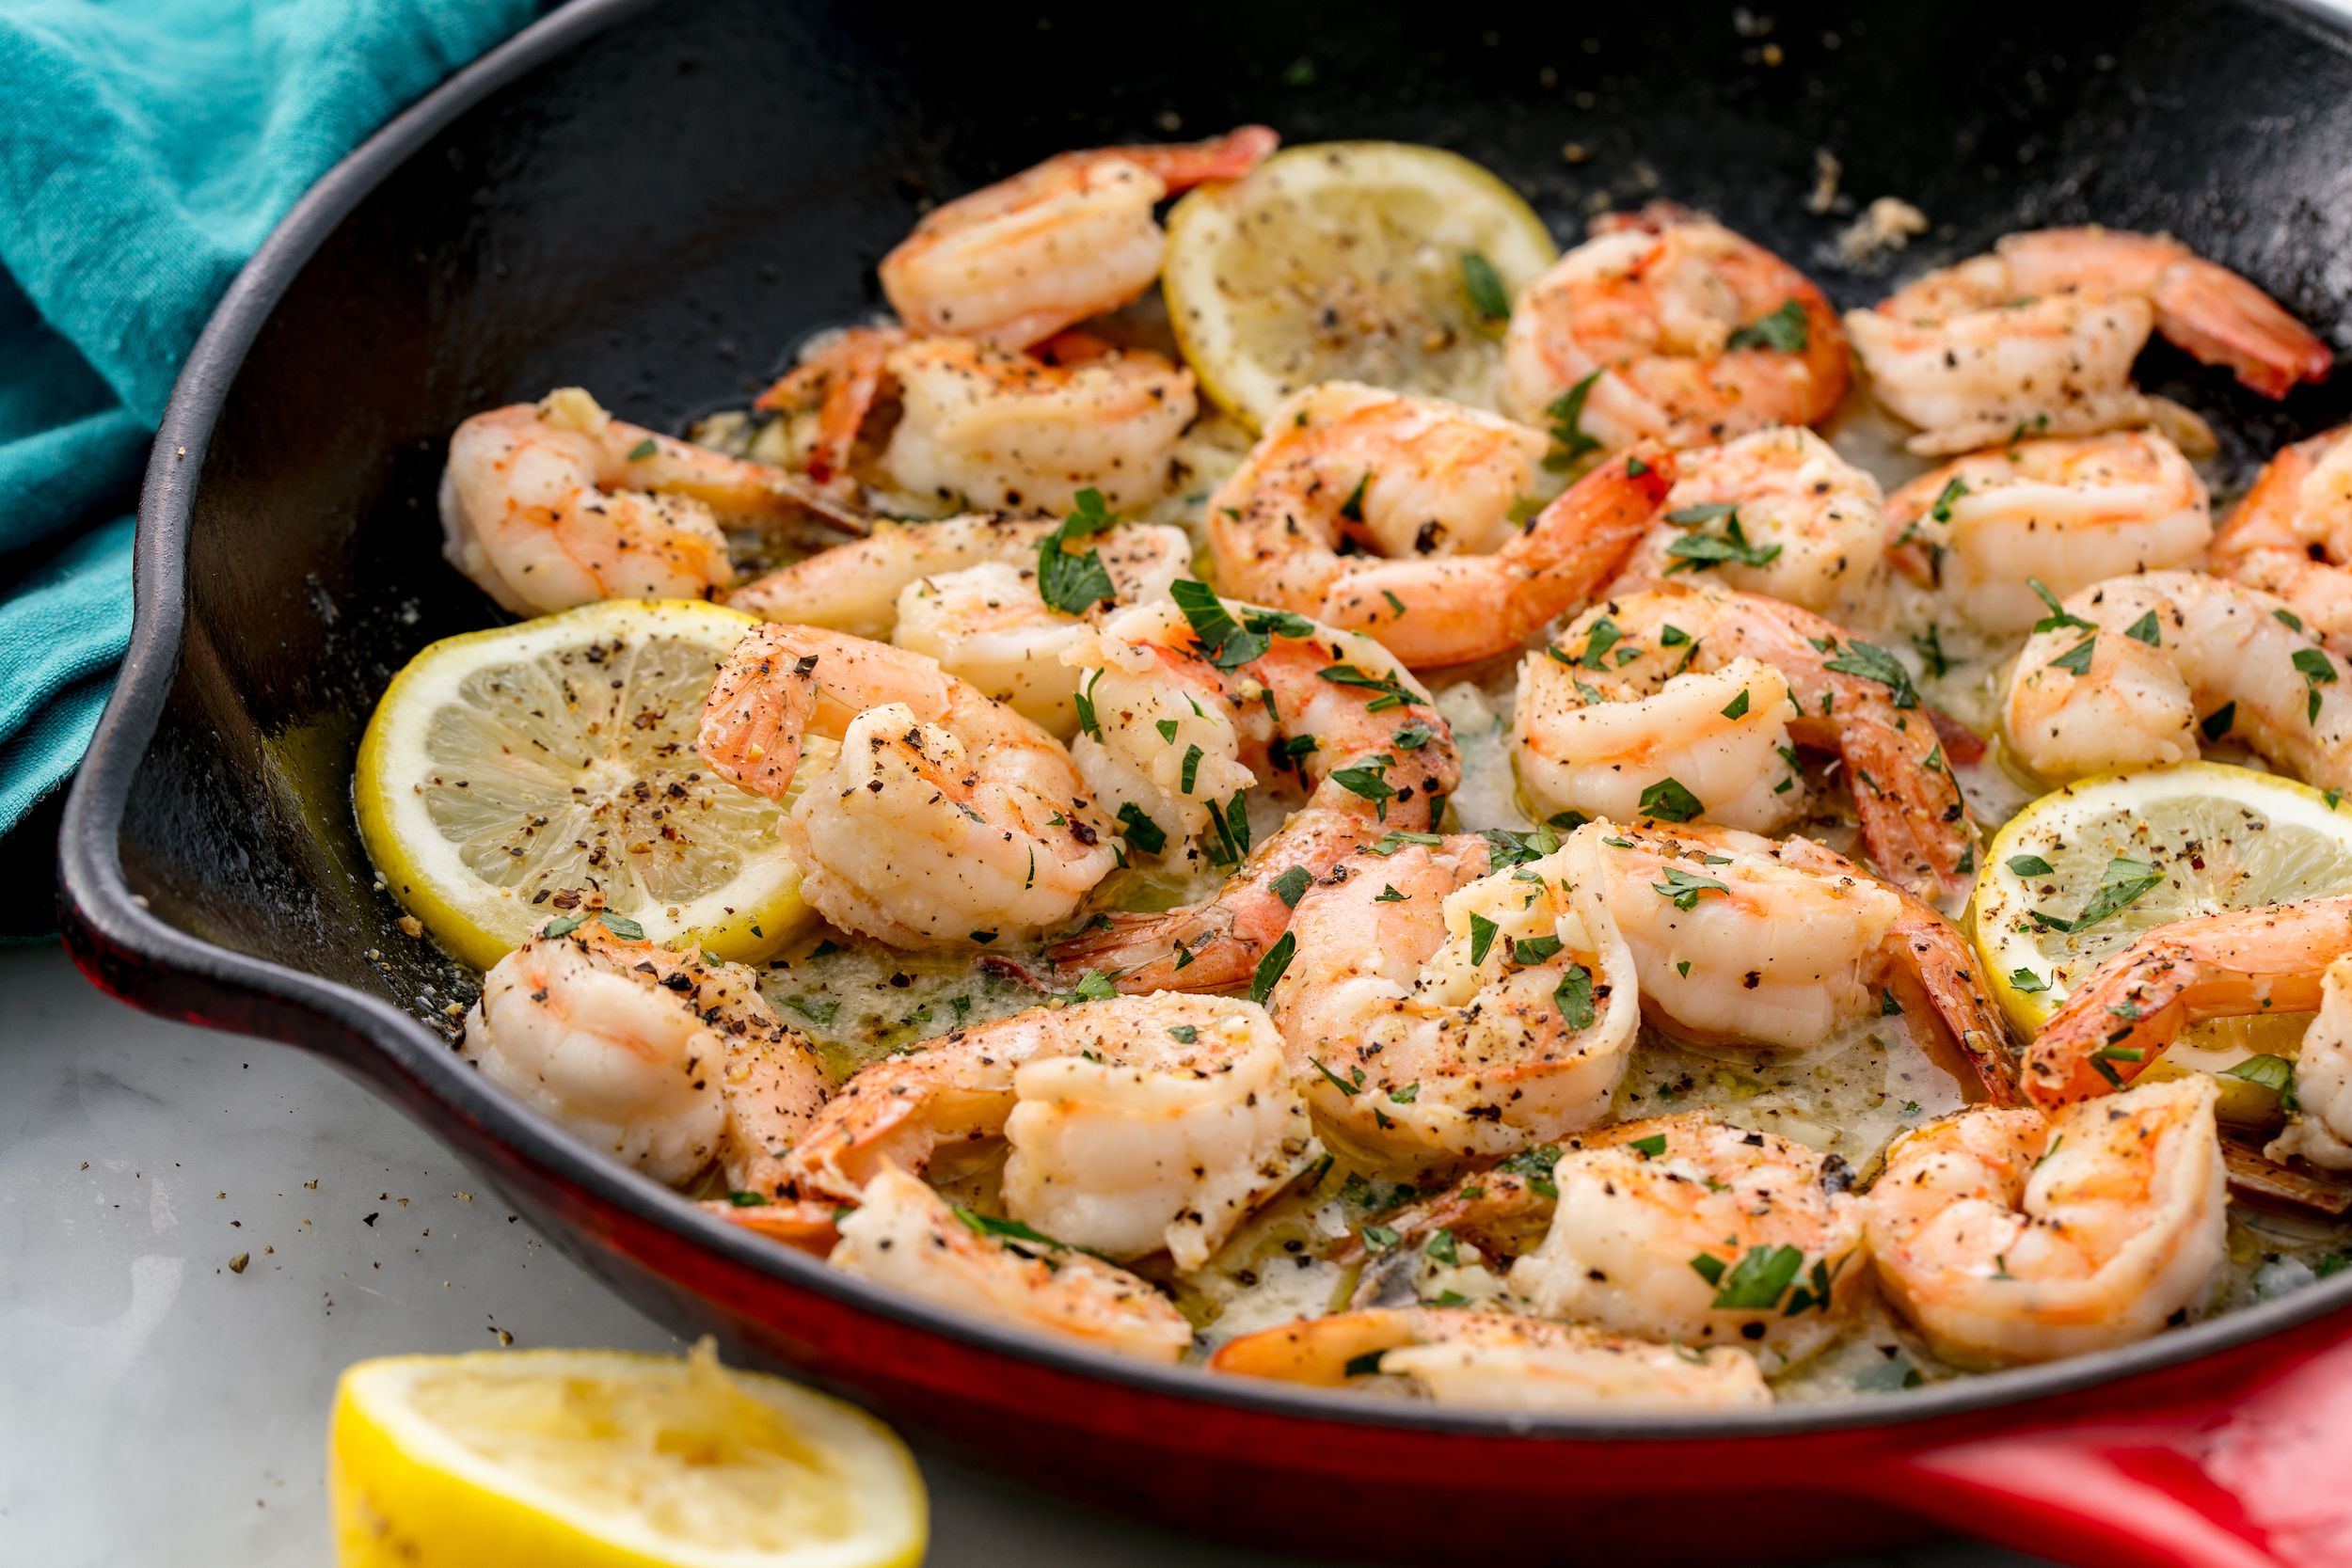 Best Lemon Garlic Shrimp Recipe - How to Make Lemon Garlic Shrimp